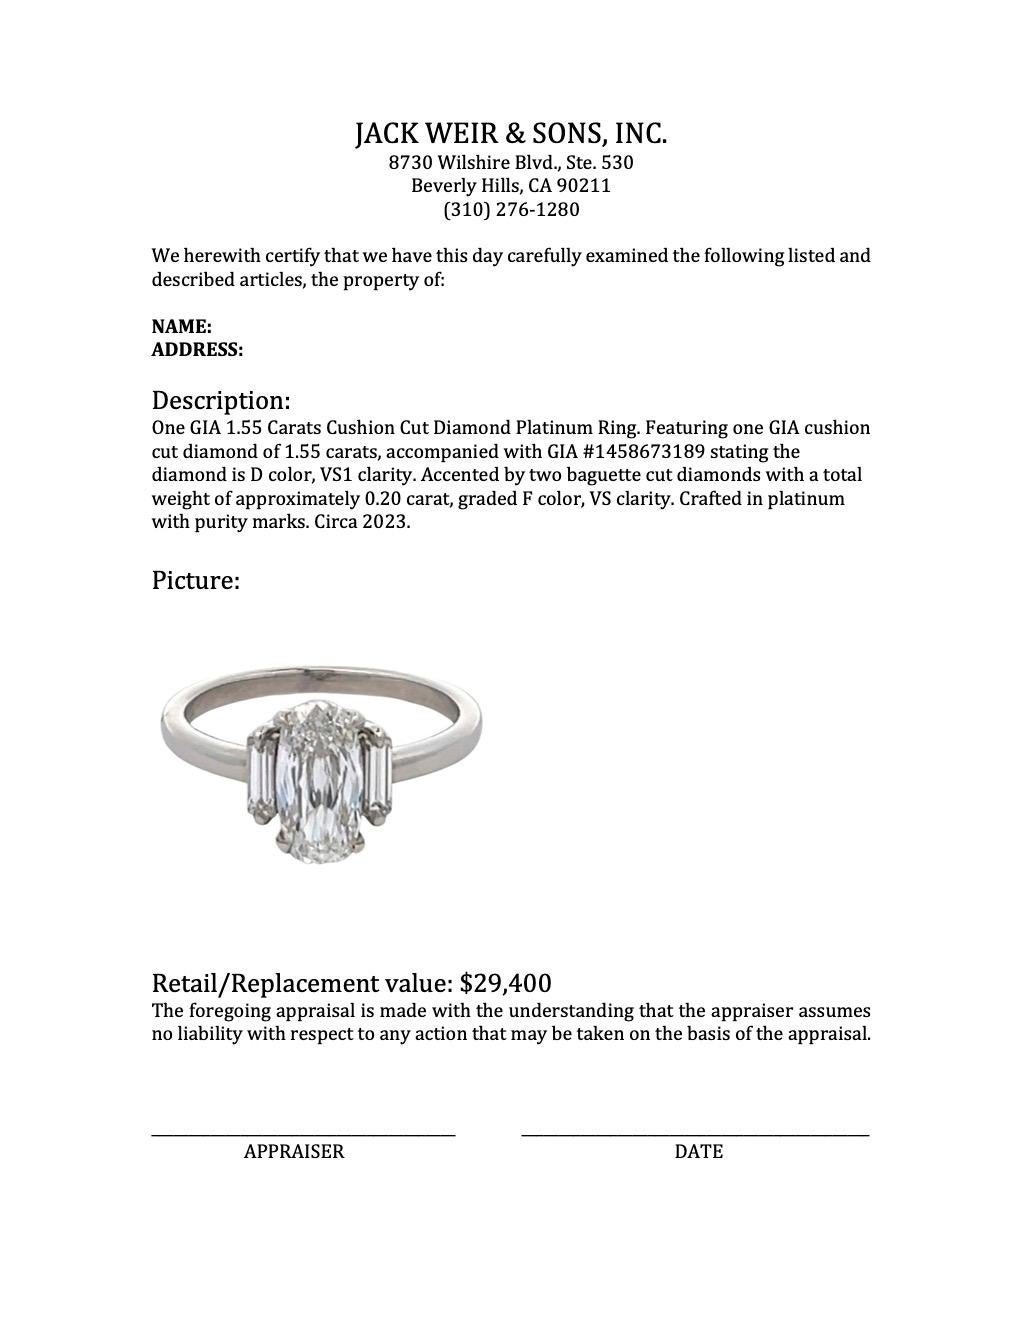 GIA 1.55 Carats Cushion Cut Diamond Platinum Ring 3